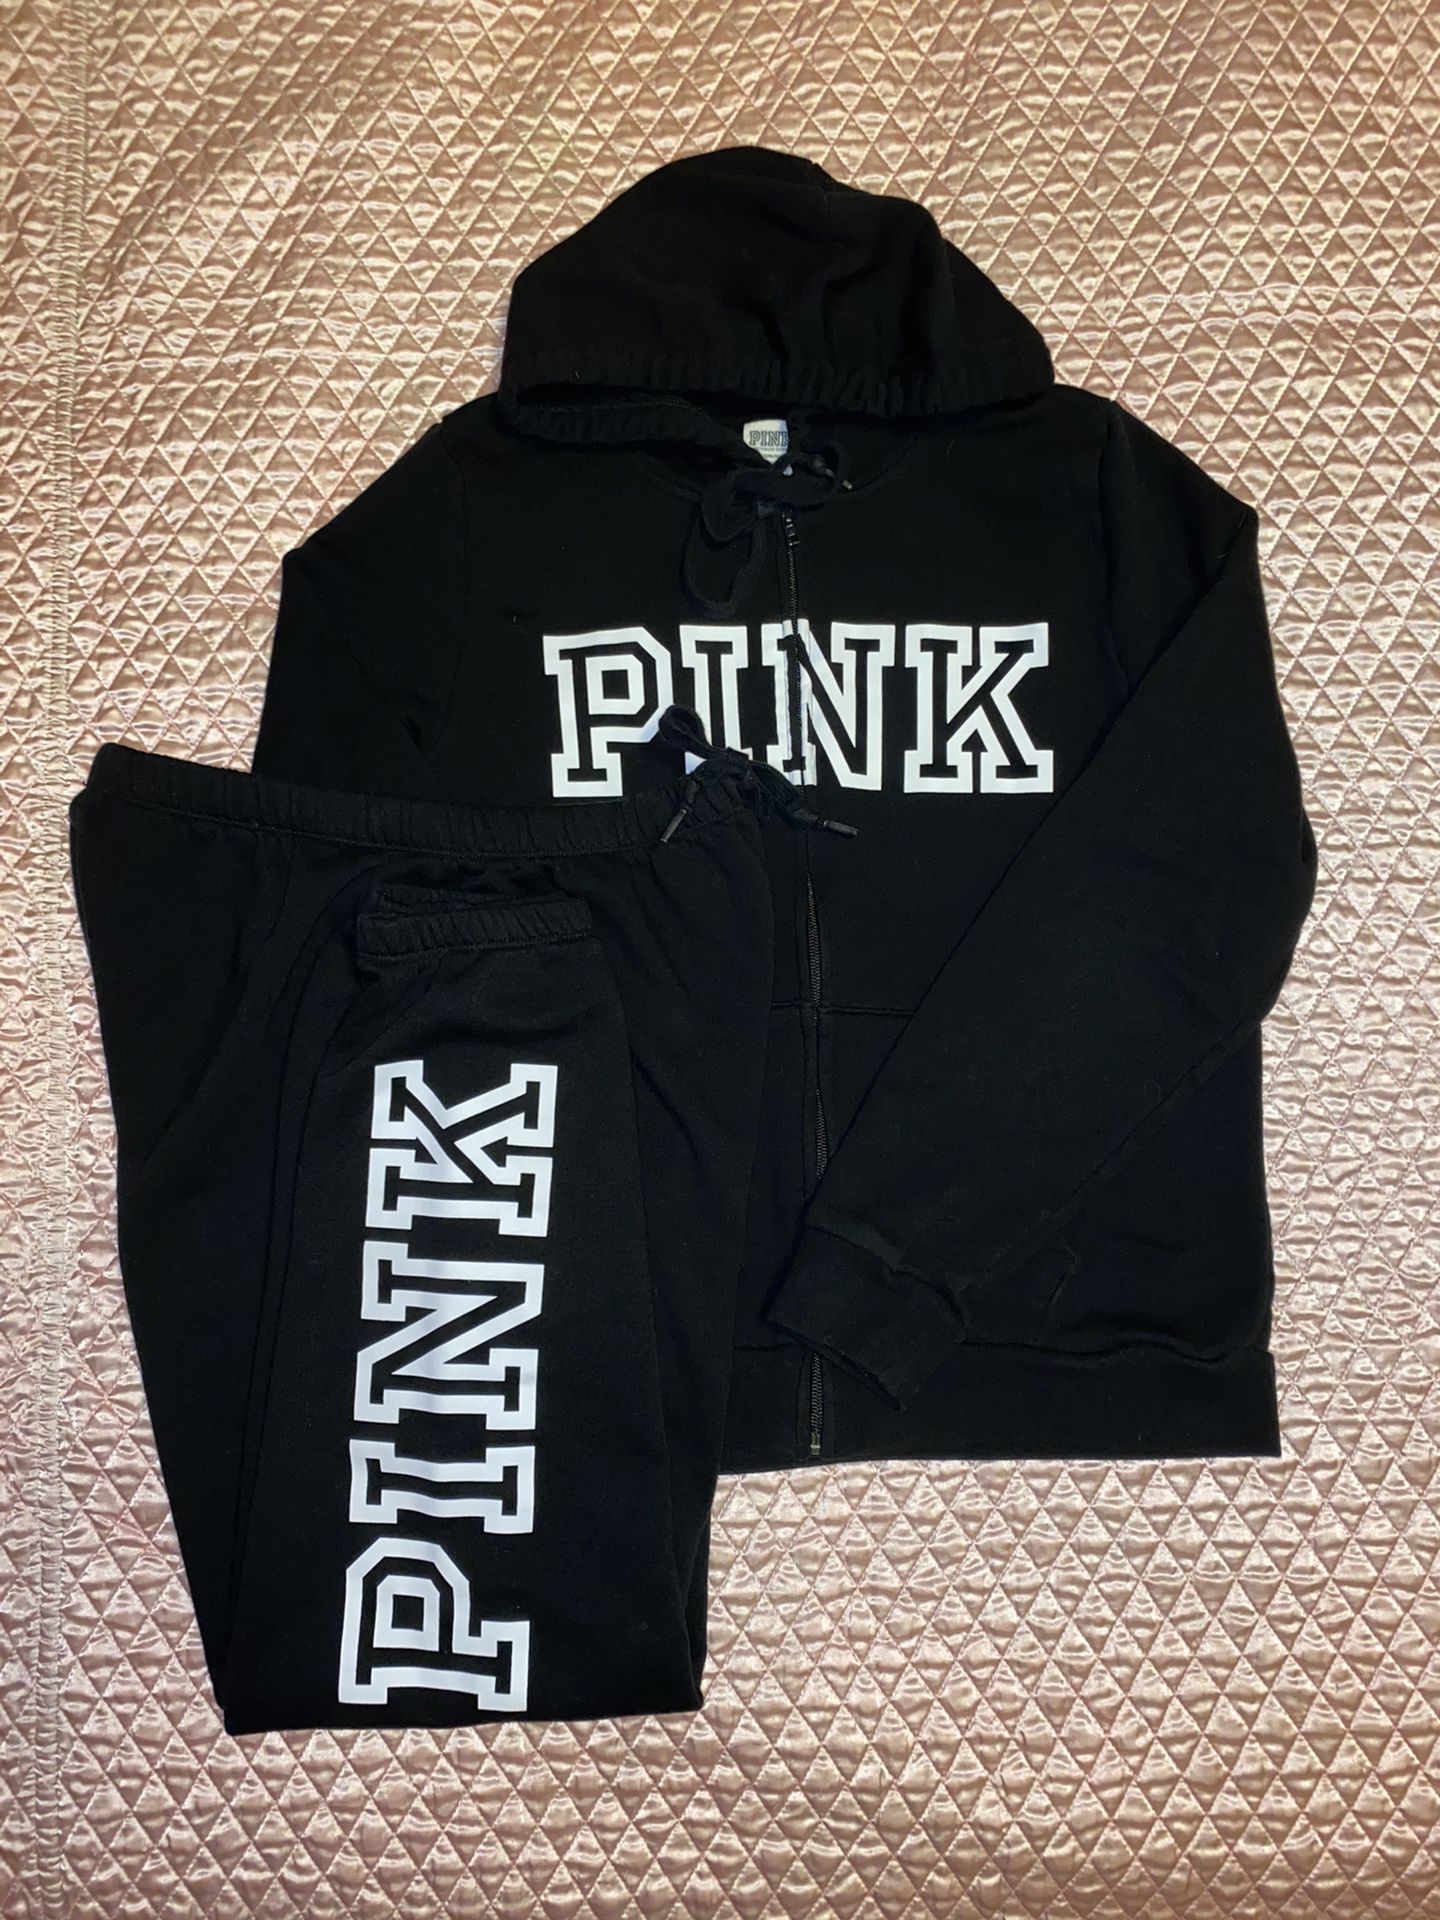 Victoria’s Secret PINK logo fleece set